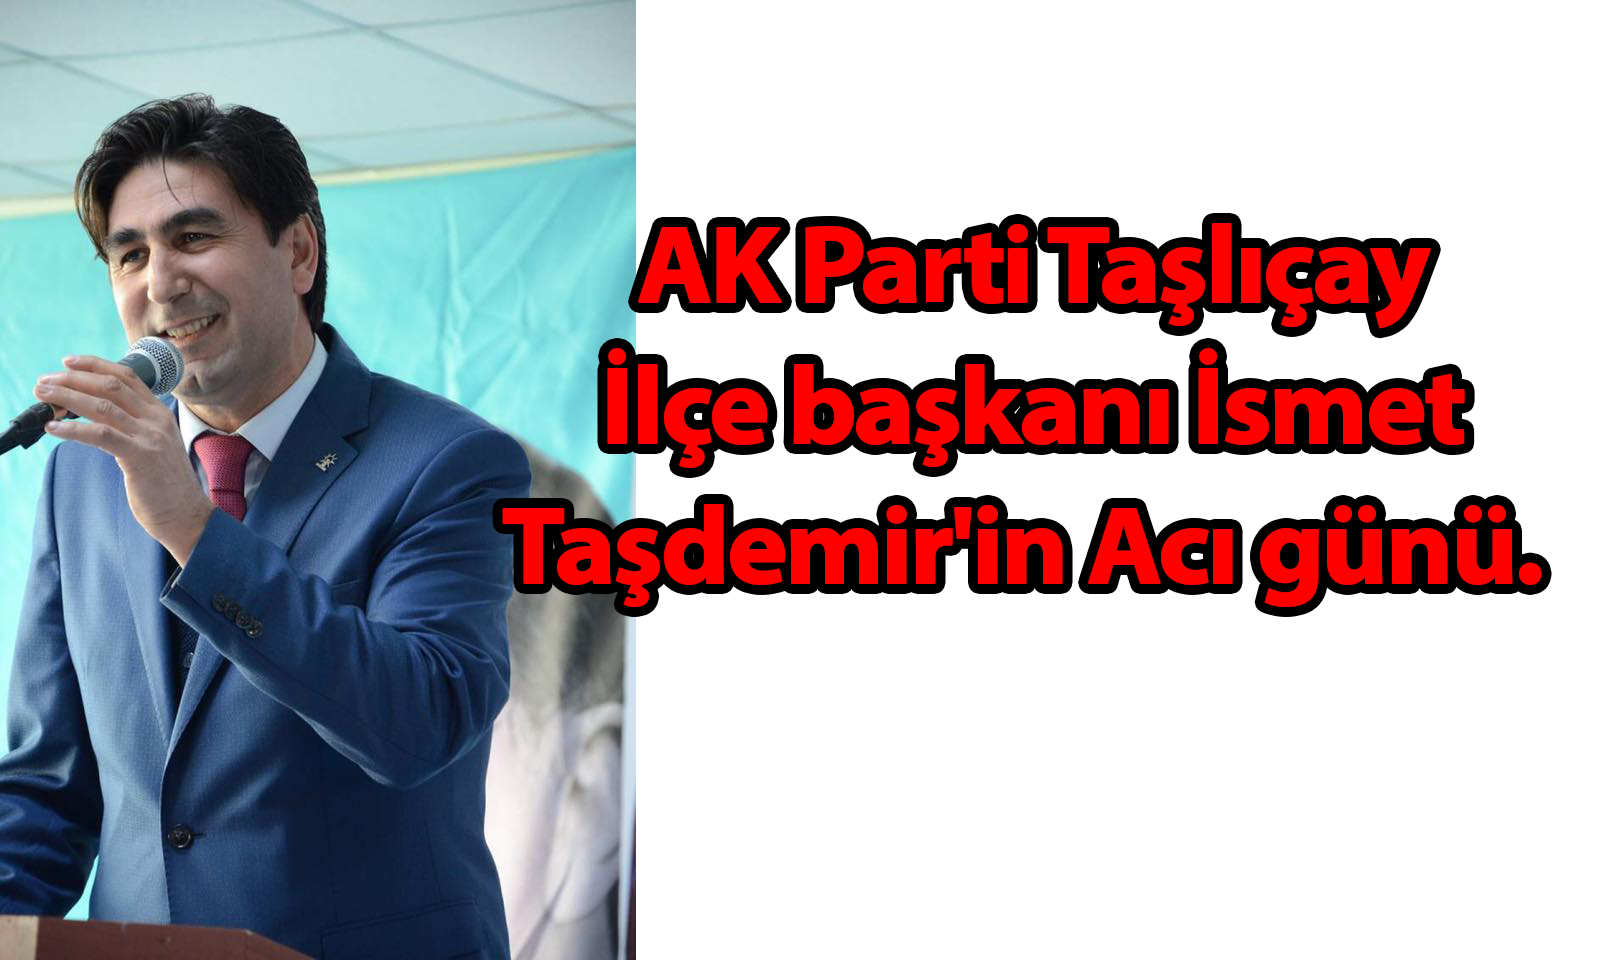 AK Parti Taşlıçay İlçe başkanı İsmet Taşdemir’in Acı günü.